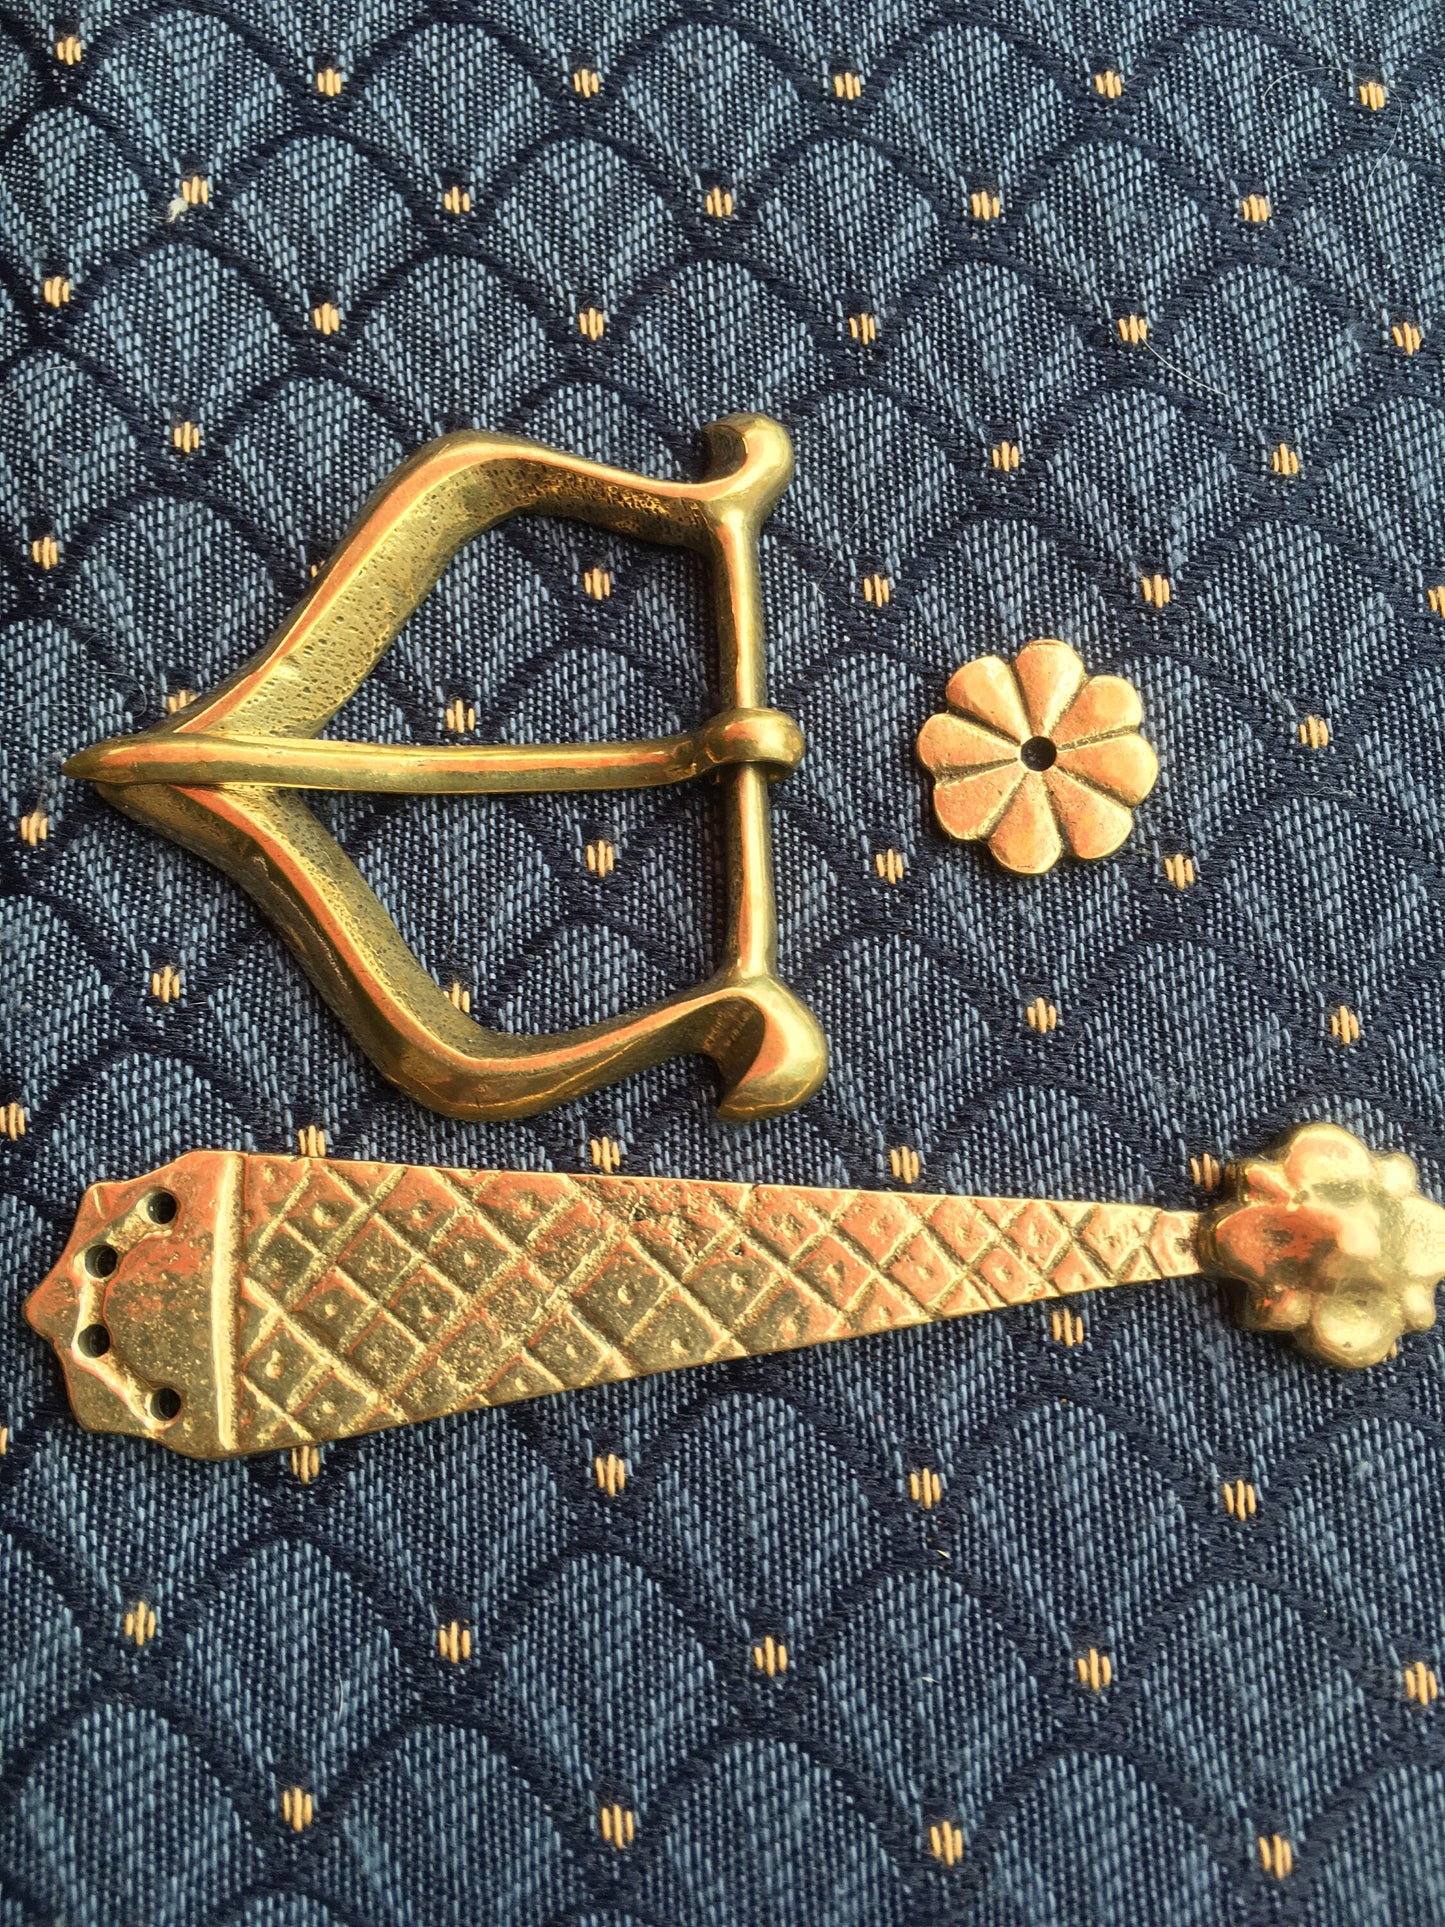 Medieval buckle set - 3 piece